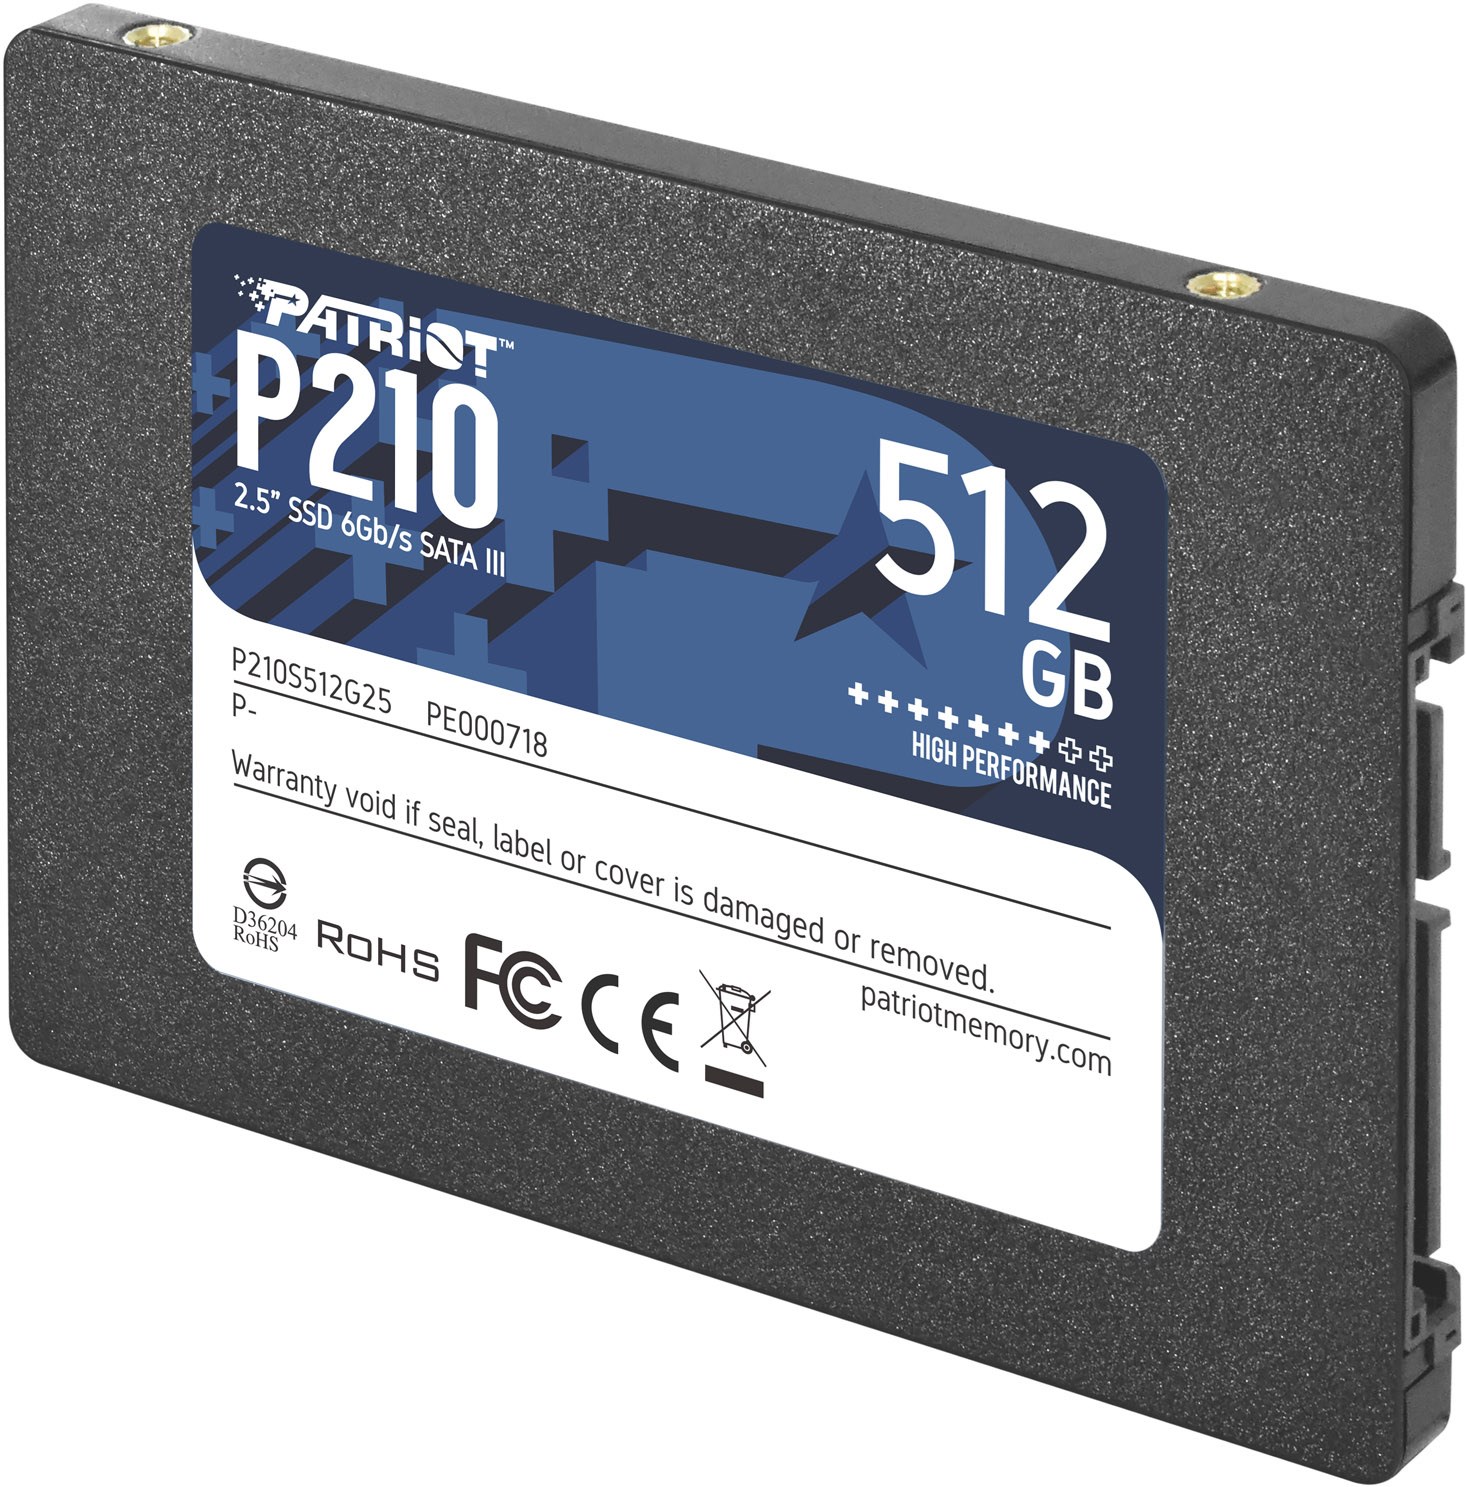 Patriot P210 512GB 2.5" SATA III SSD